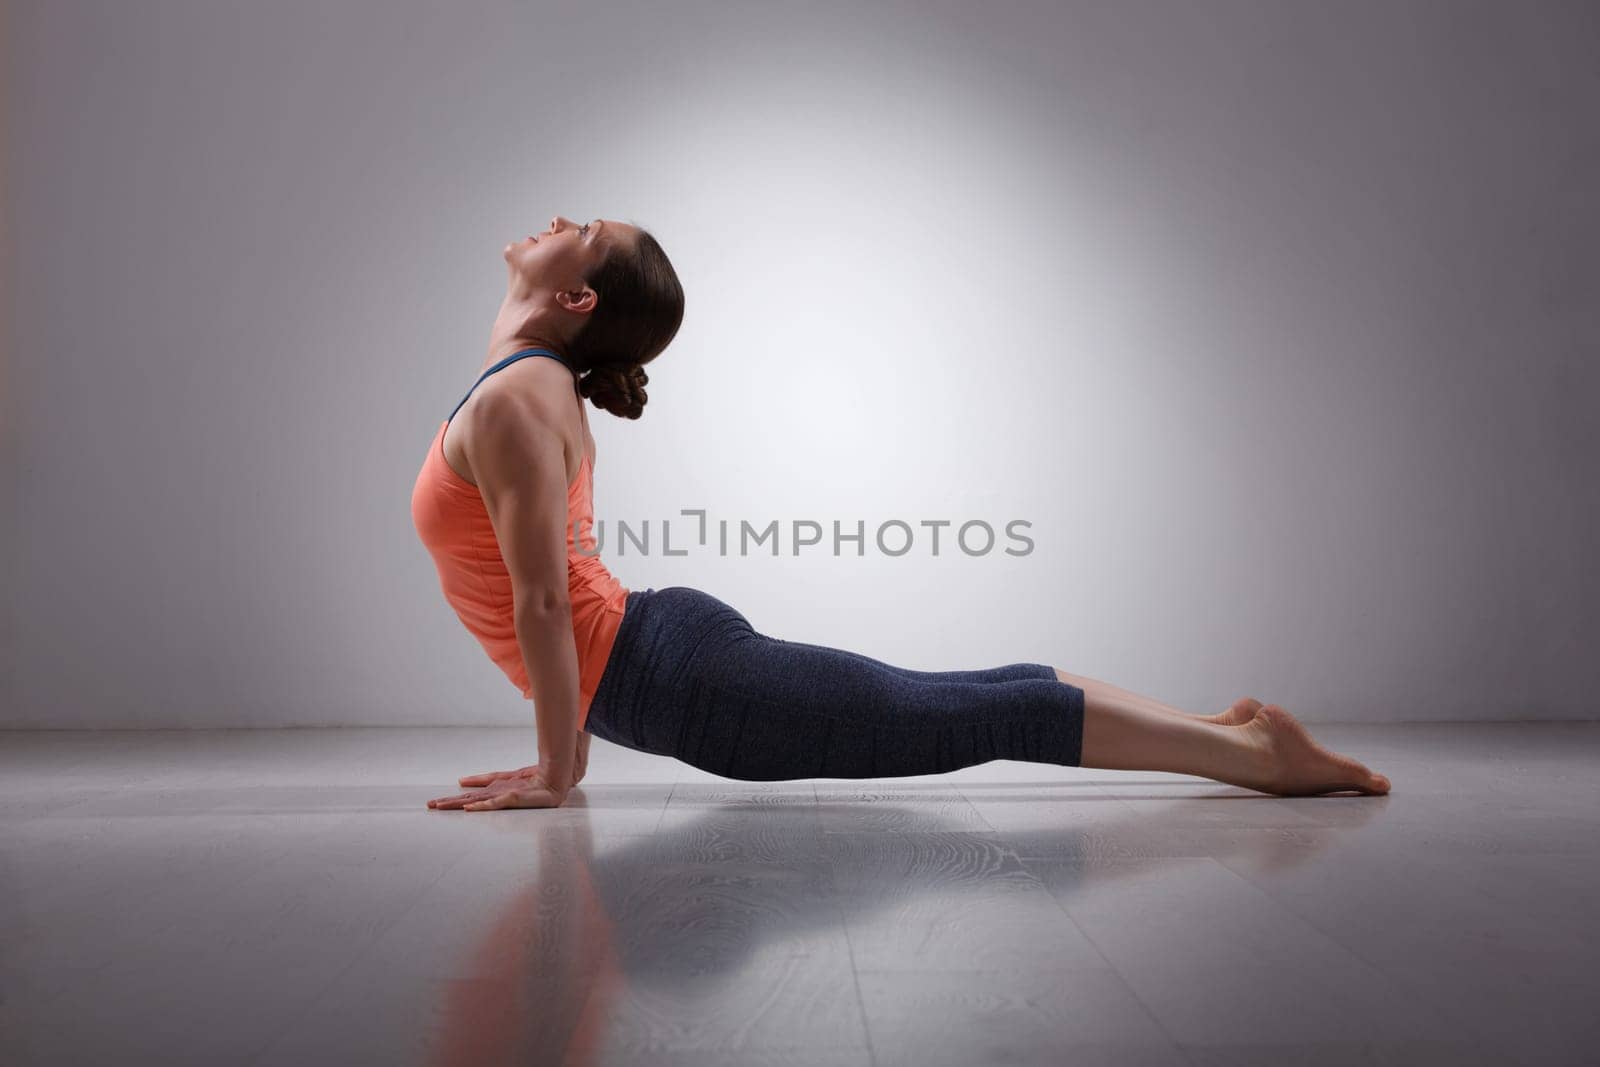 Beautiful sporty fit yogini woman practices yoga asana urdhva mukha svanasana - upward facing dog pose in studio